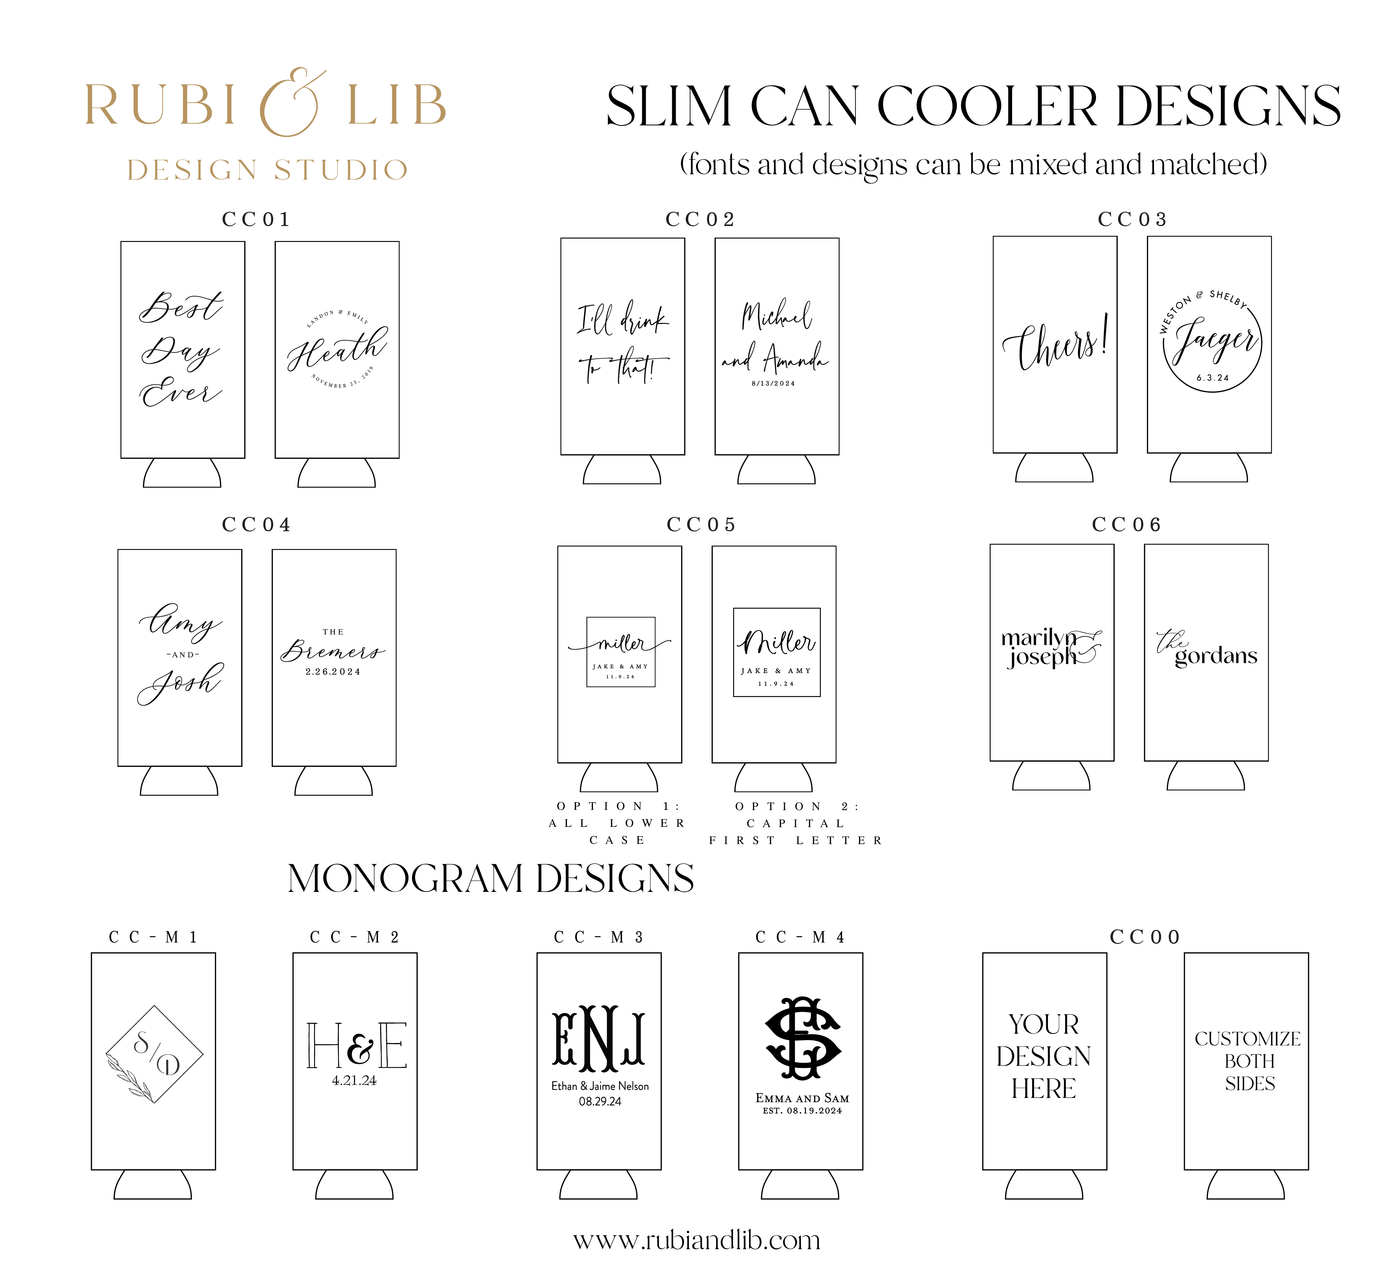 Monogram Design Slim Can Coolers